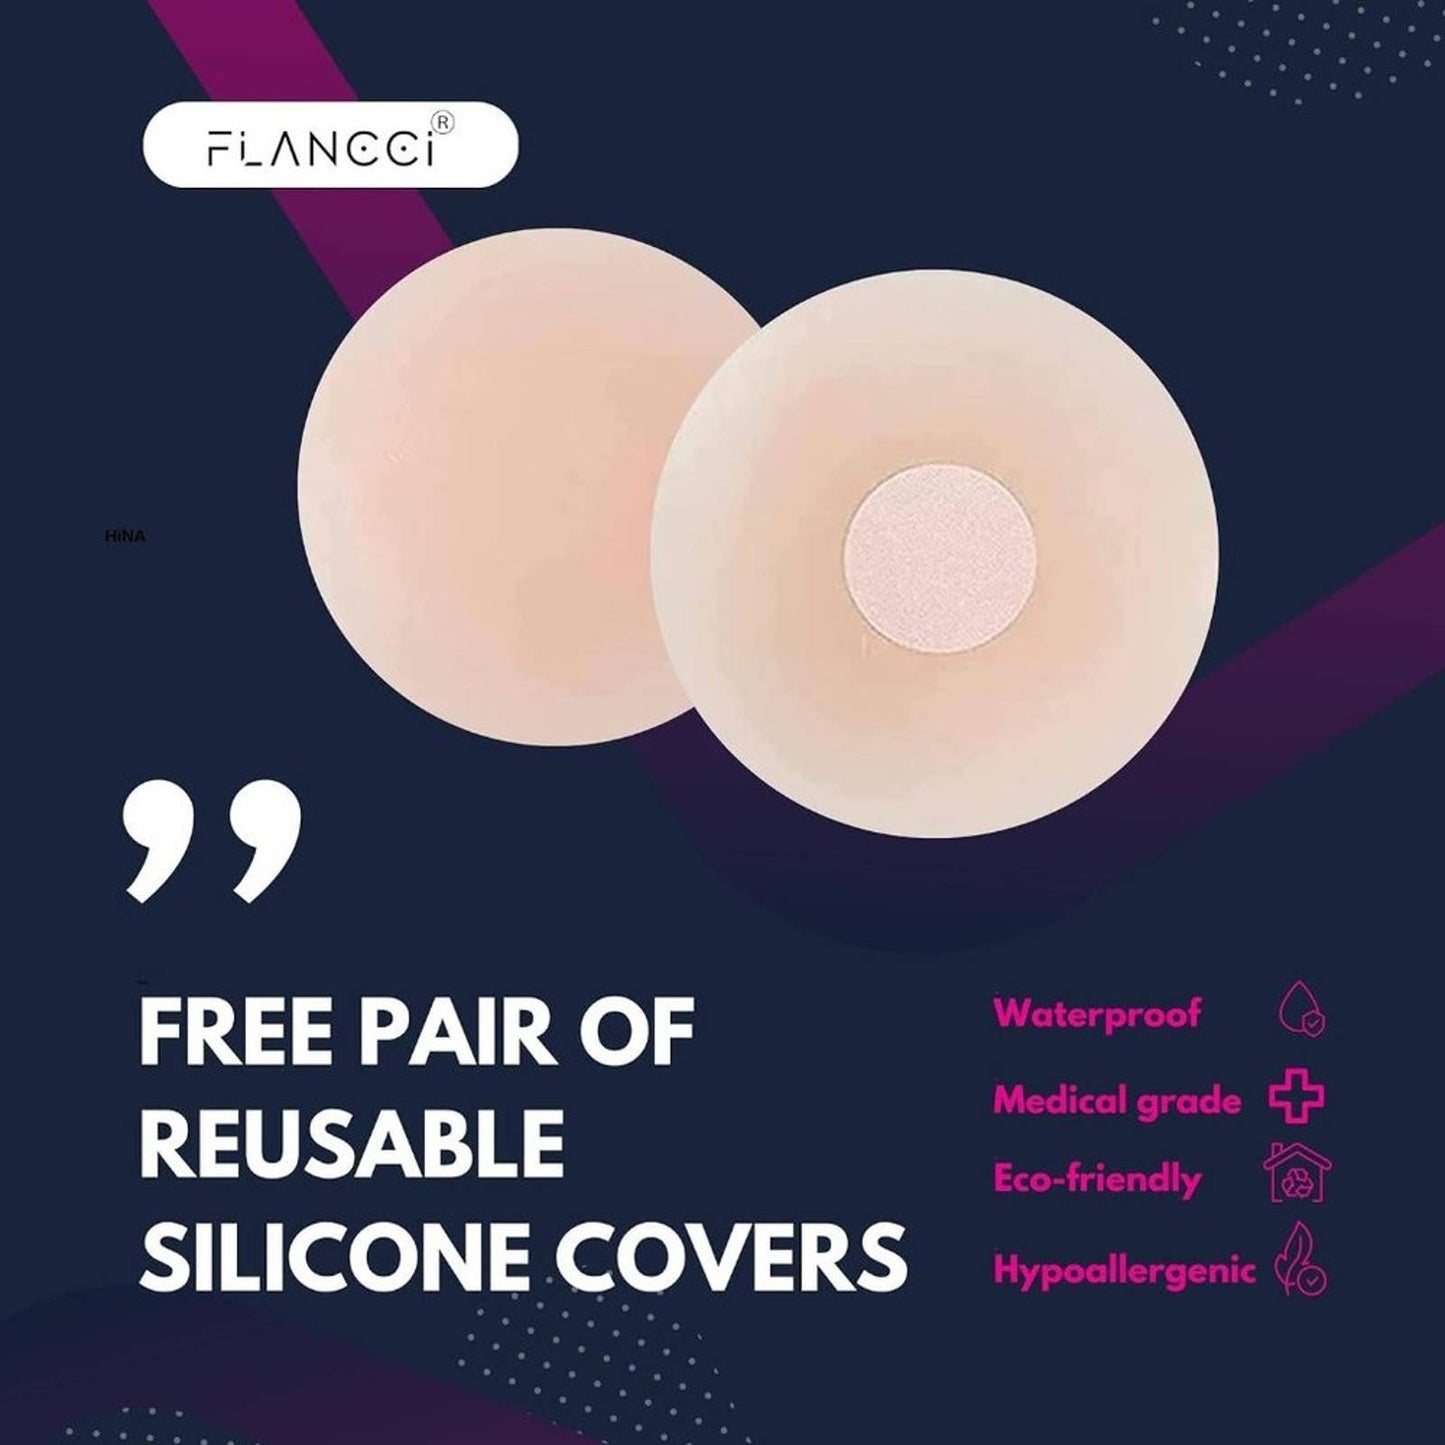 FLANCCI Boob Tape Boobytape for Breast Lift | Achieve Chest Brace Lift